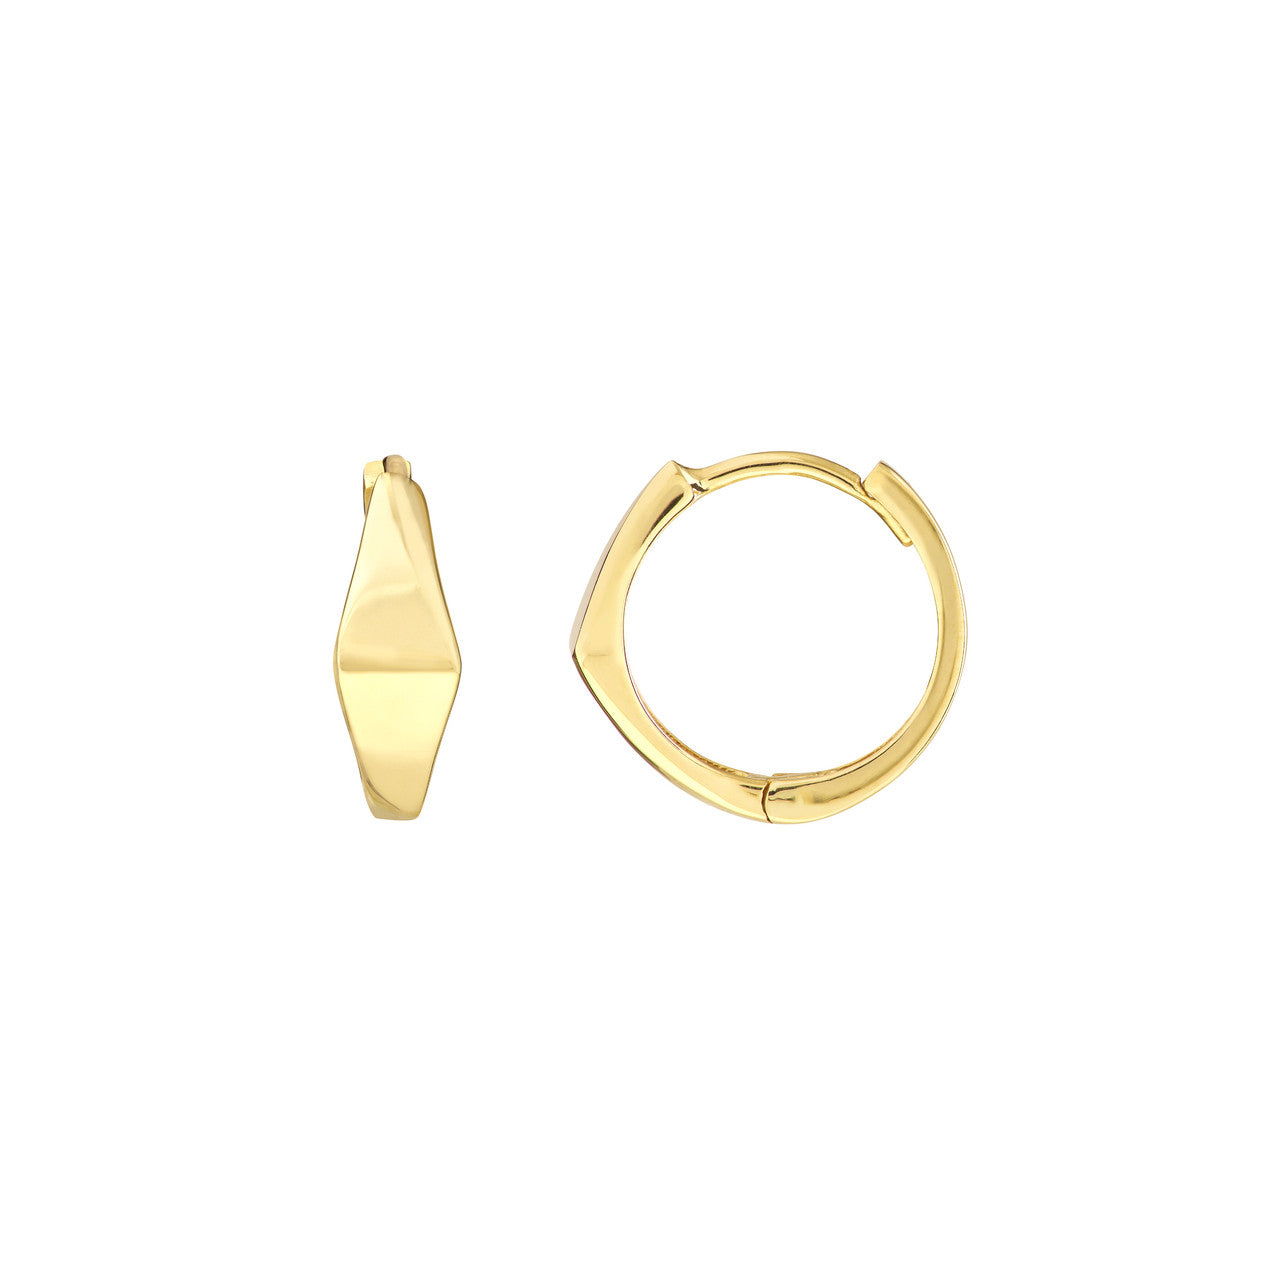 10K Gold Chic Originality Triangle Hoop Earrings